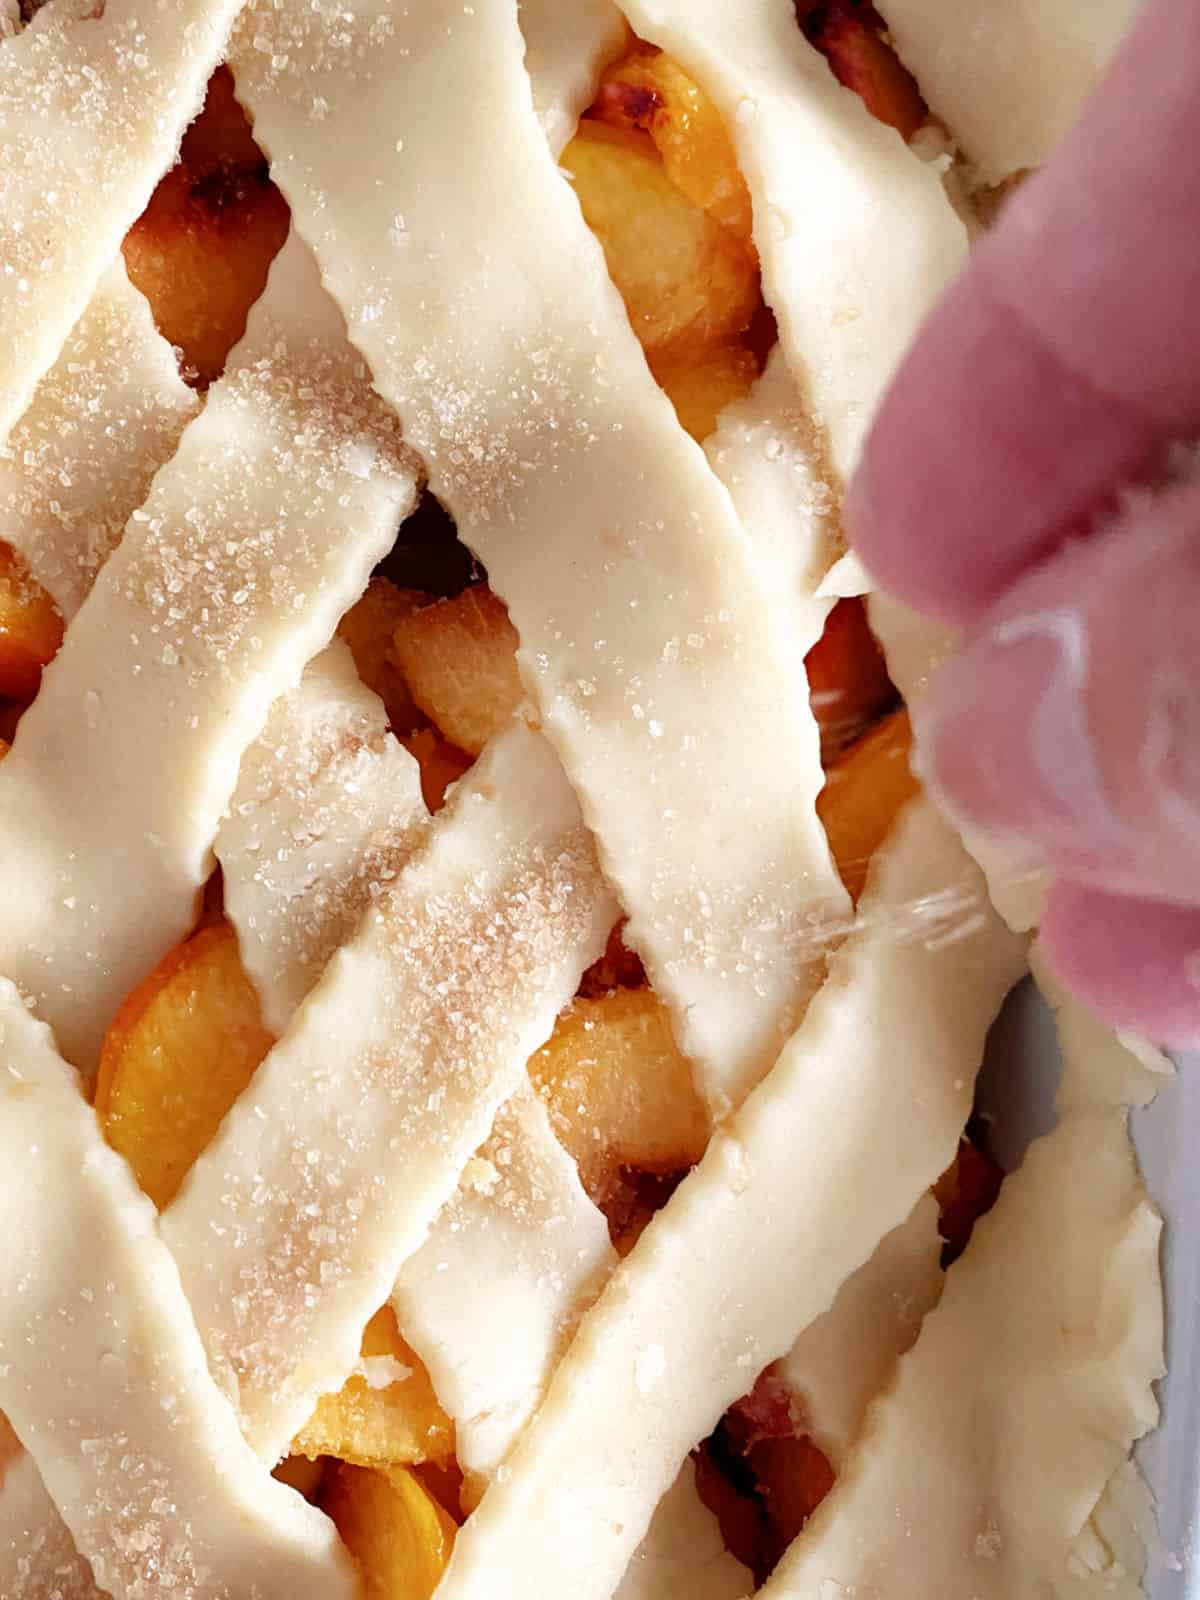 Hand sprinkling brown sugar on a lattice crust. Close up image.